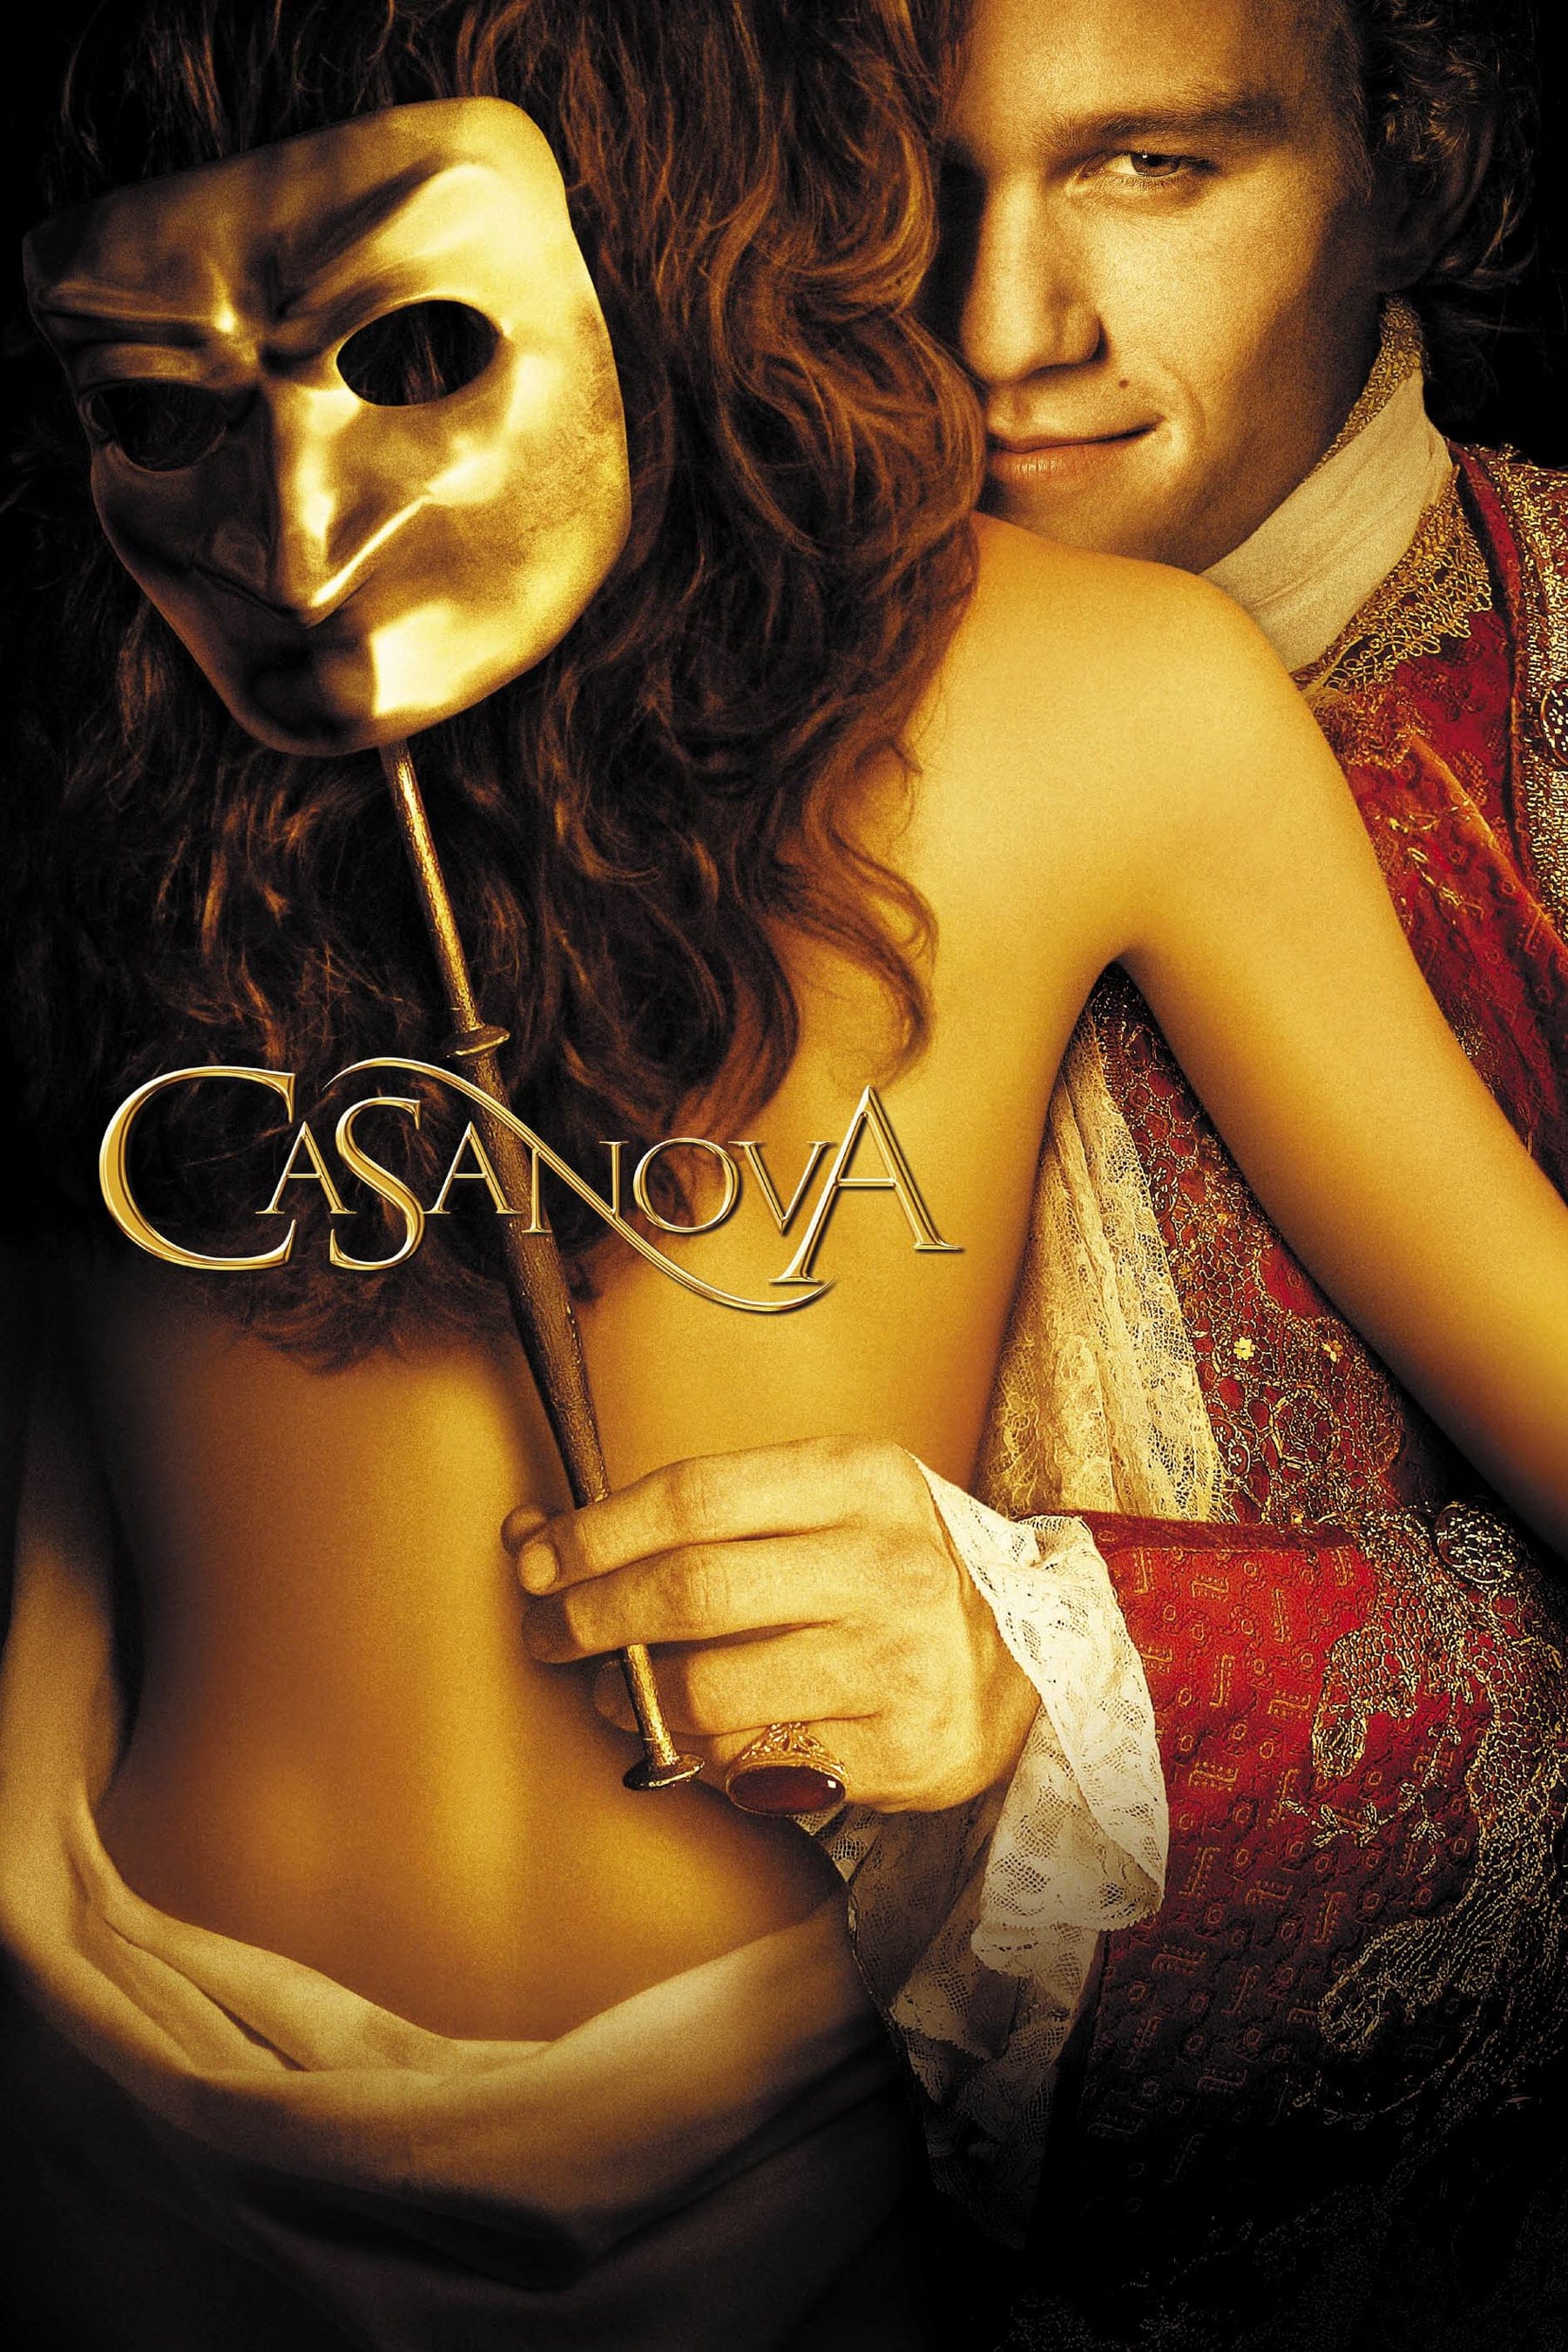 Plakat von "Casanova"